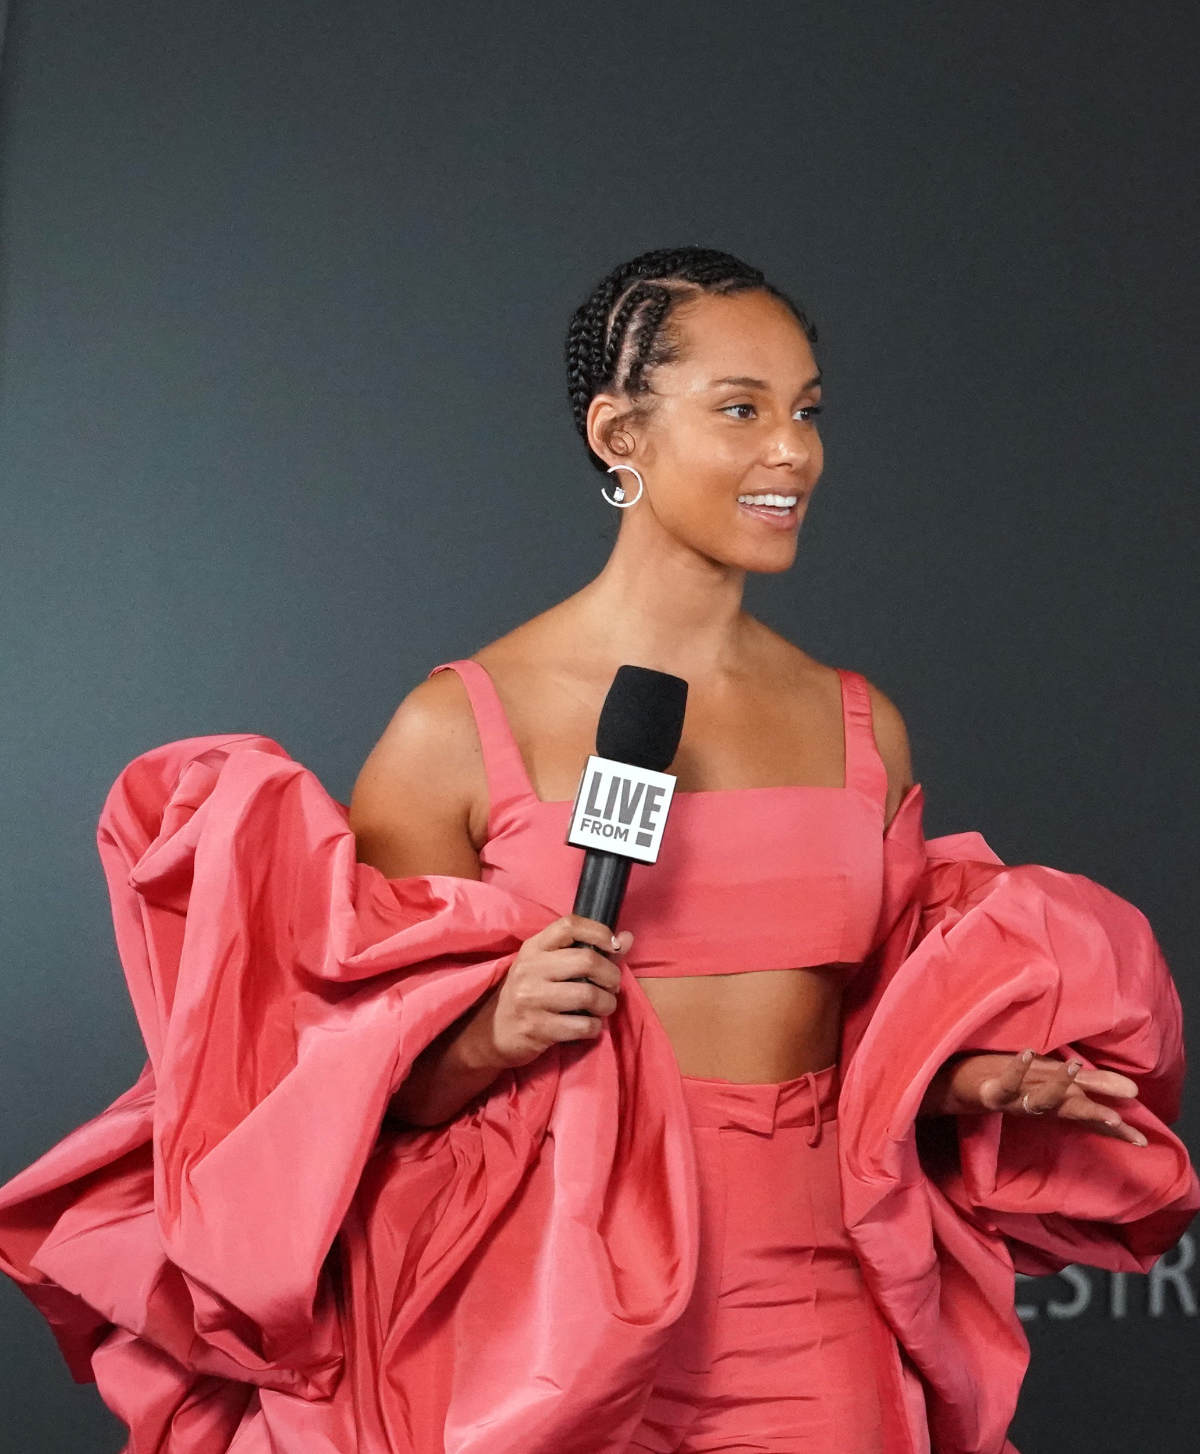 Alicia Keys And SZA In Messika Paris At The 2021 Billboard Music Awards